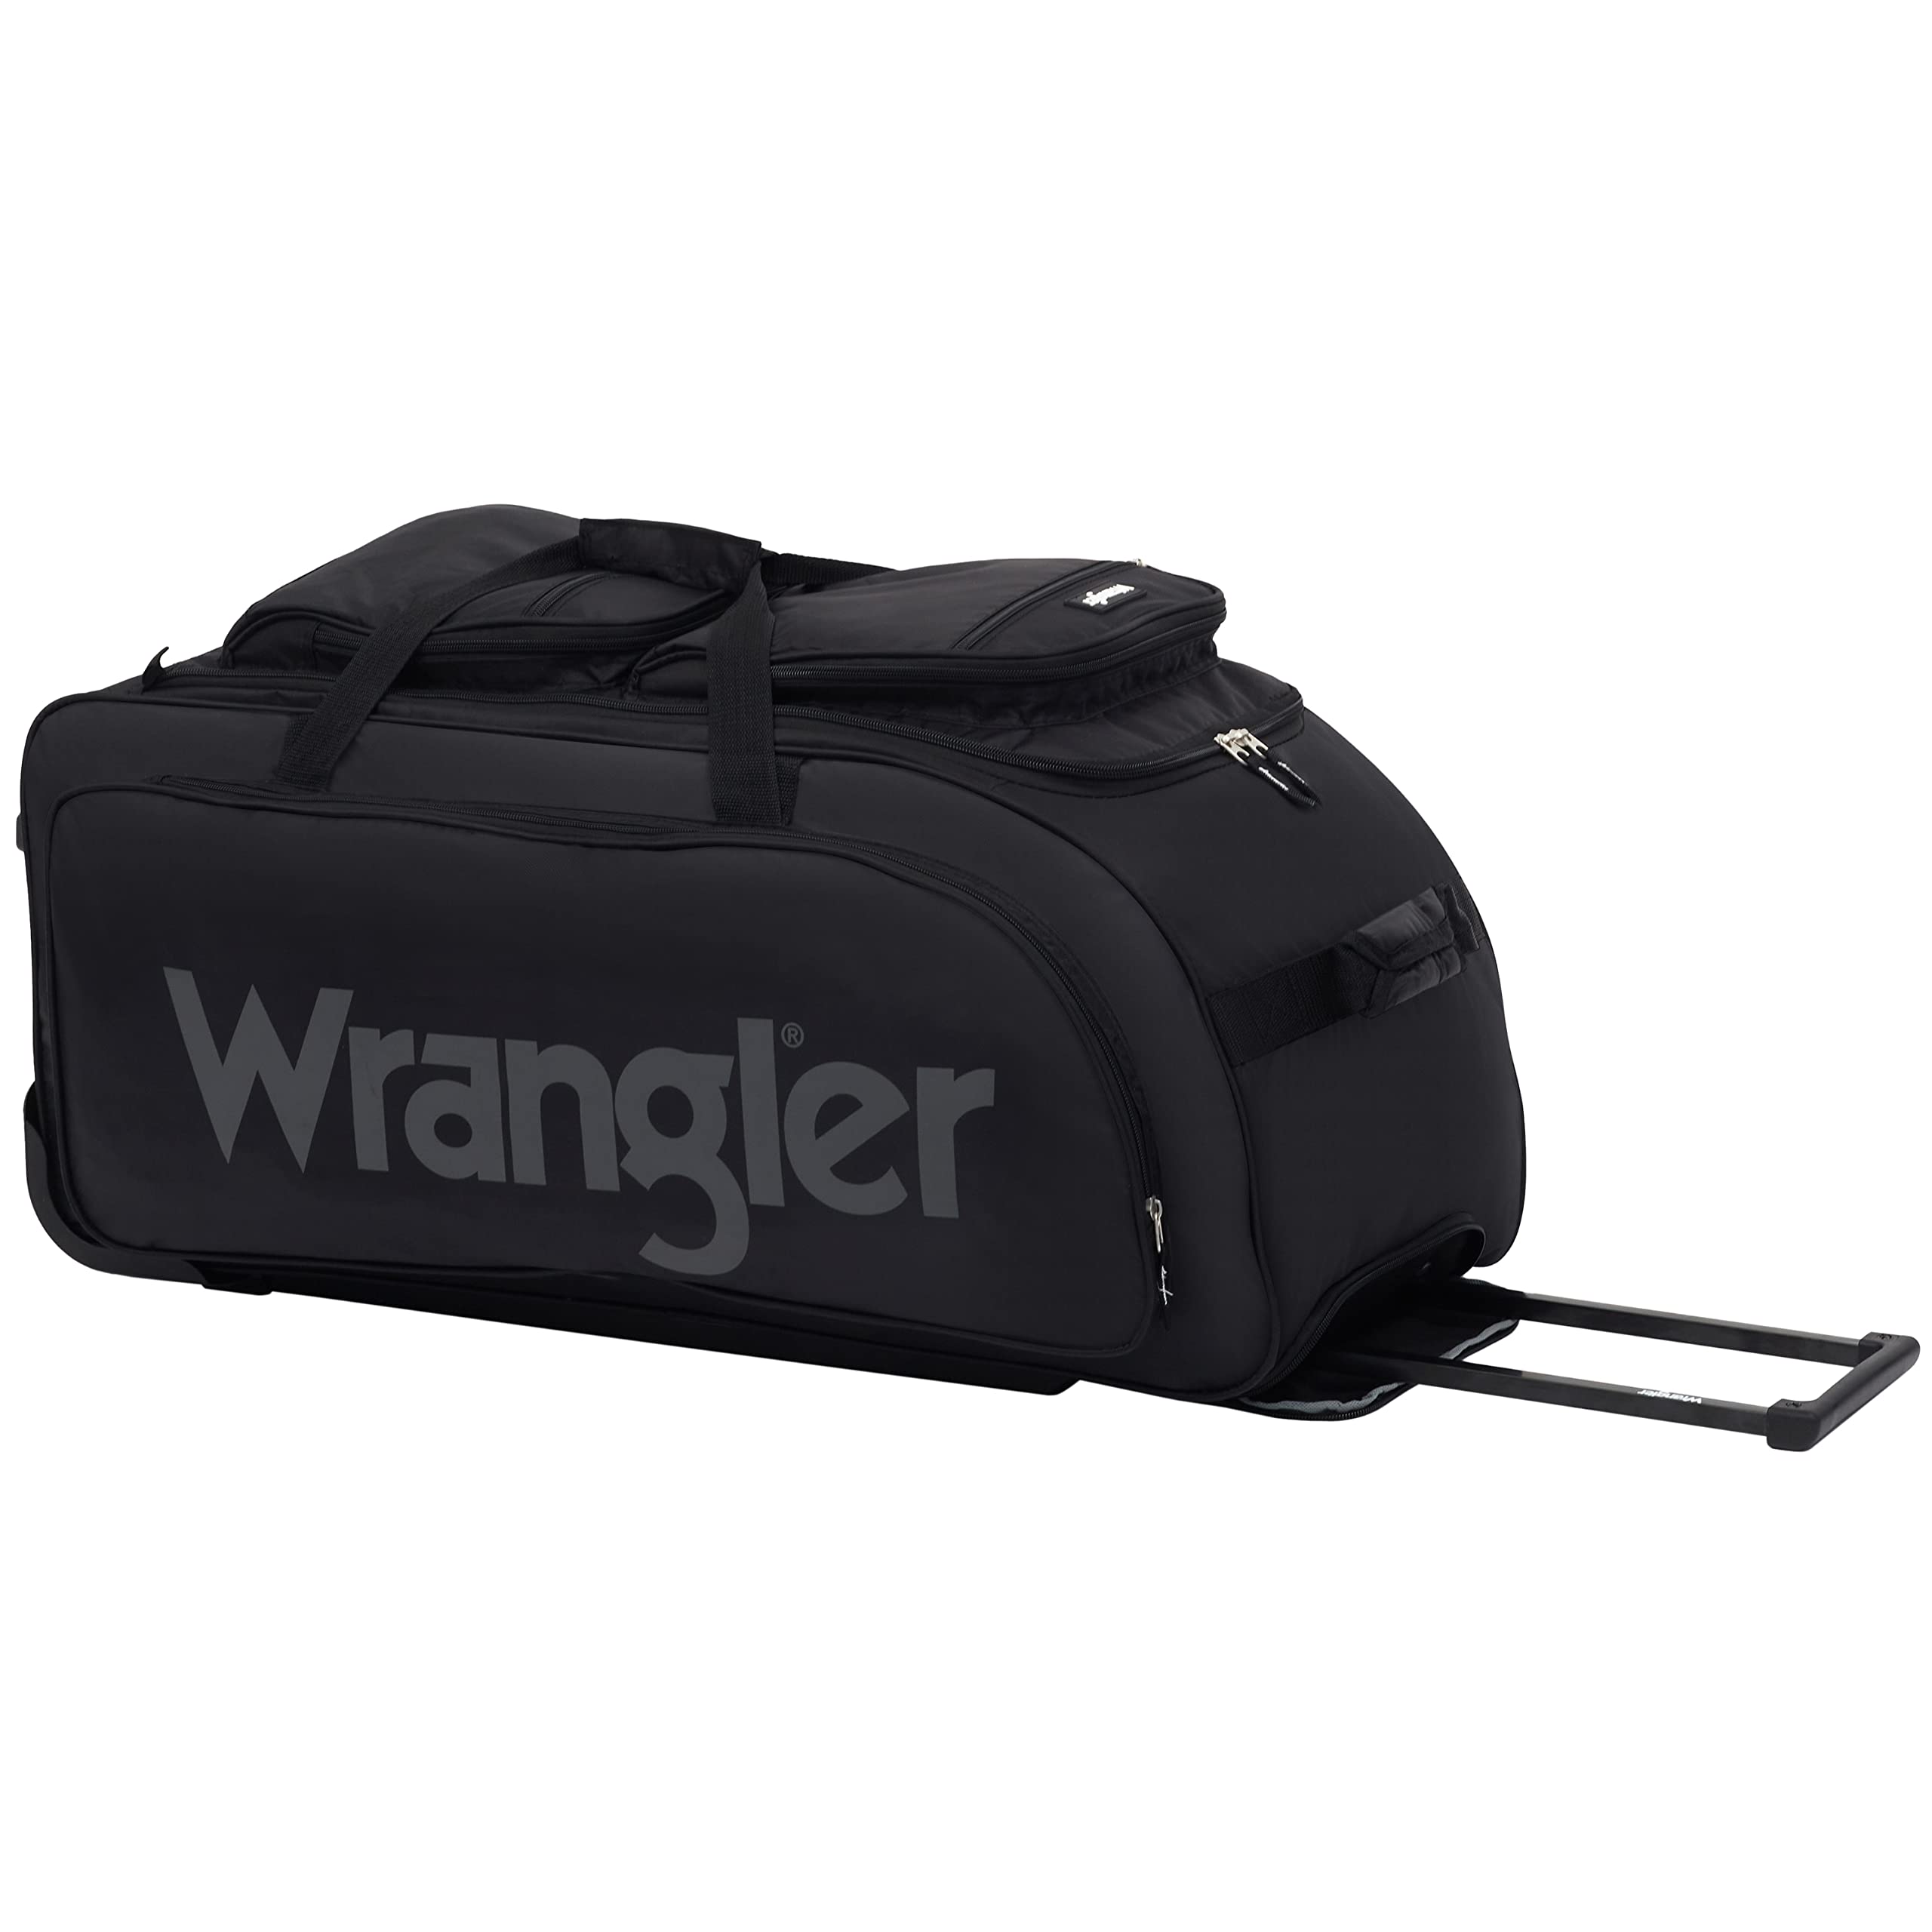 Mua Wrangler Wesley Rolling Duffel Bag trên Amazon Mỹ chính hãng 2022 |  Giaonhan247